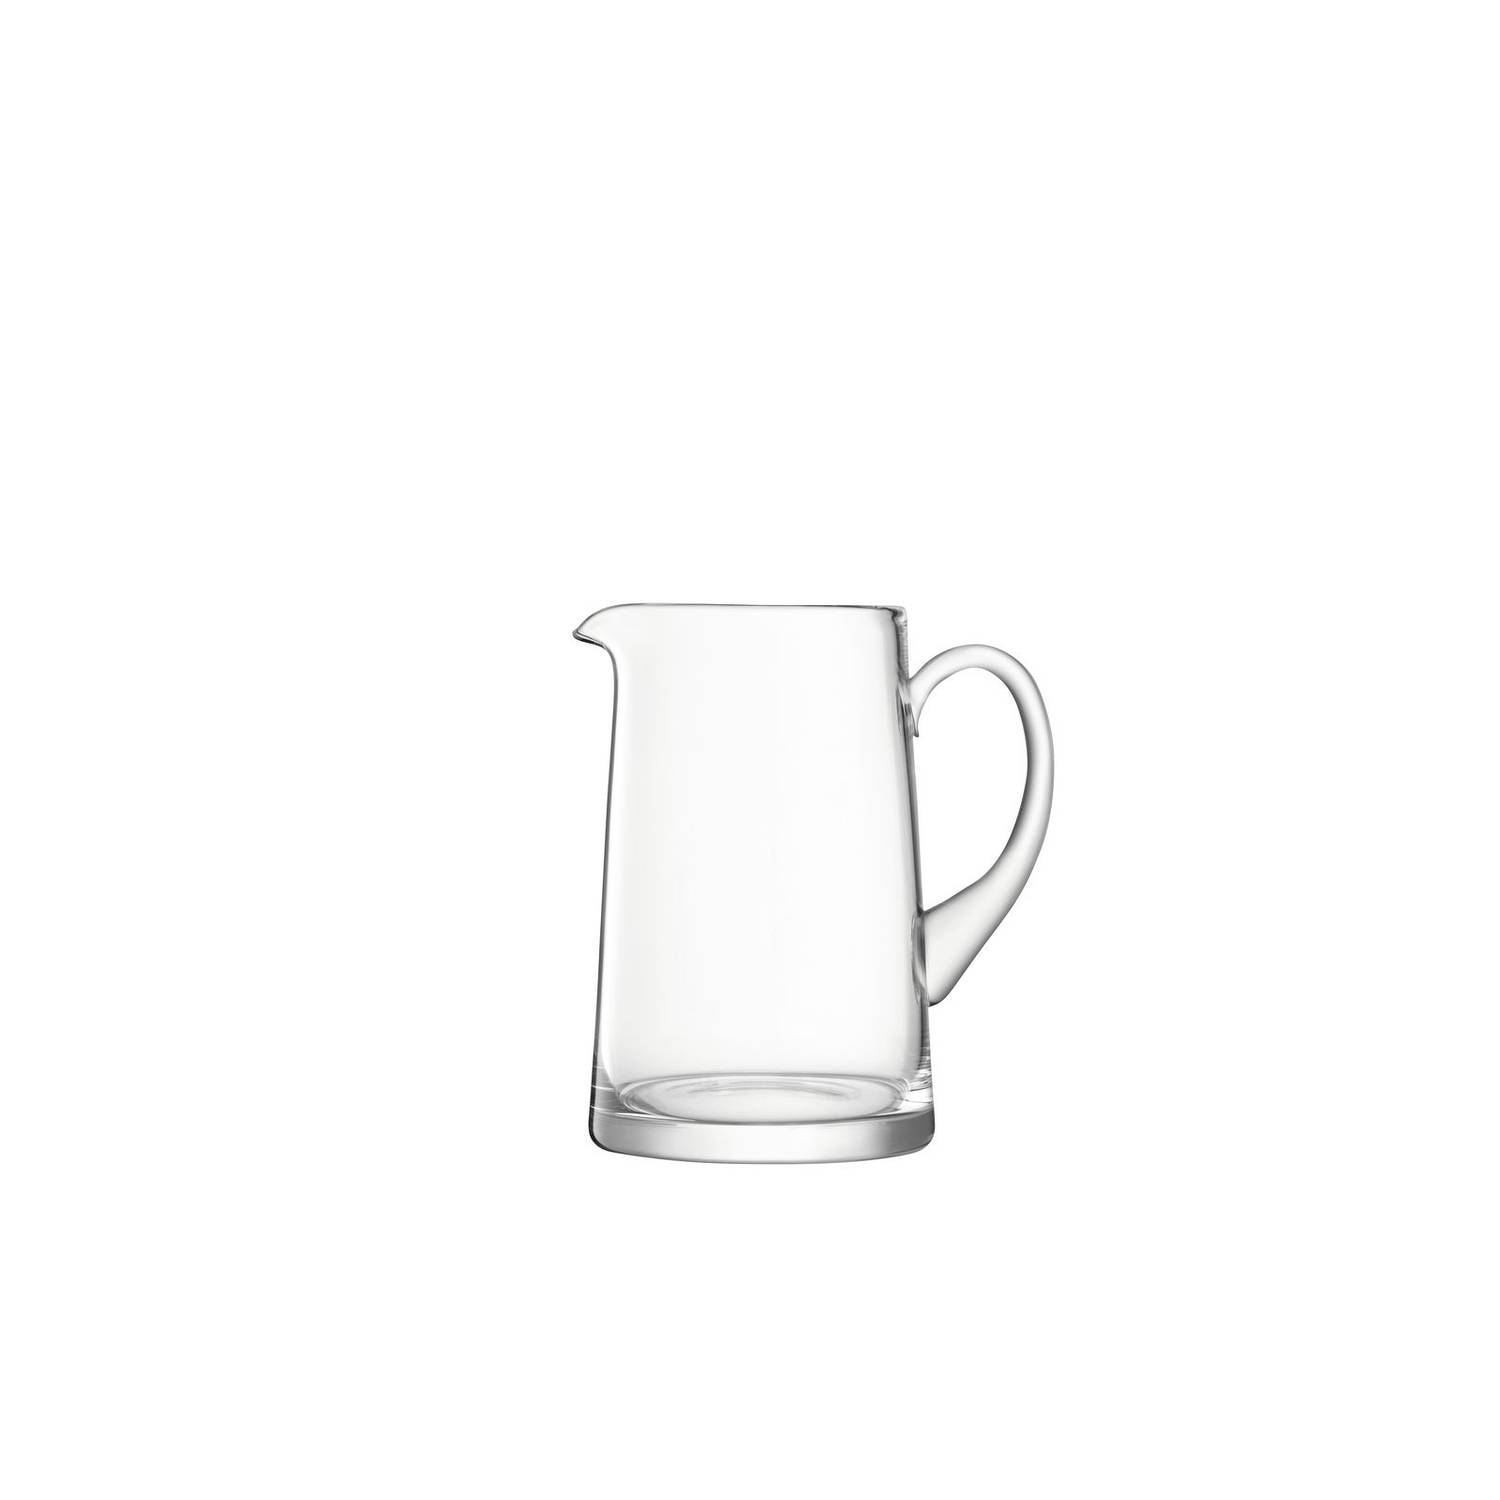 L.S.A. - Bar Waterkaraf Klein 1,7 liter - Glas - Transparant